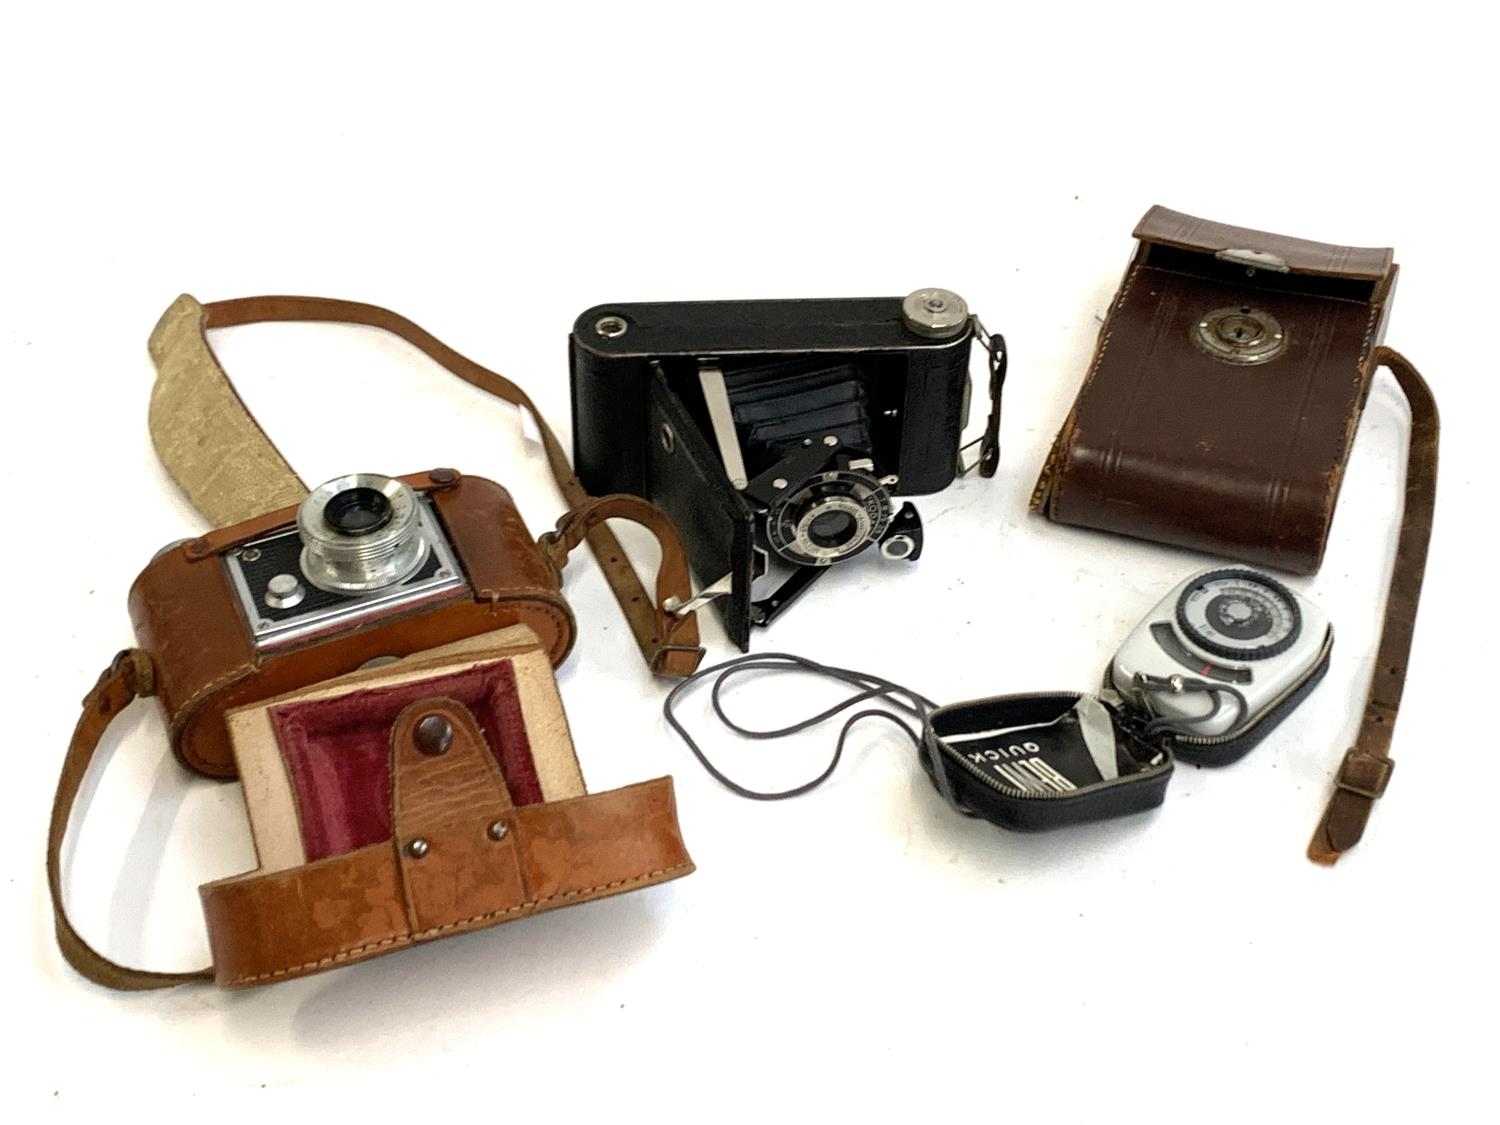 A Kodak Junior 620 bellows camera, Finetta 88 Saraber Goslav 1:2.8/45mm camera and a Bewi quick